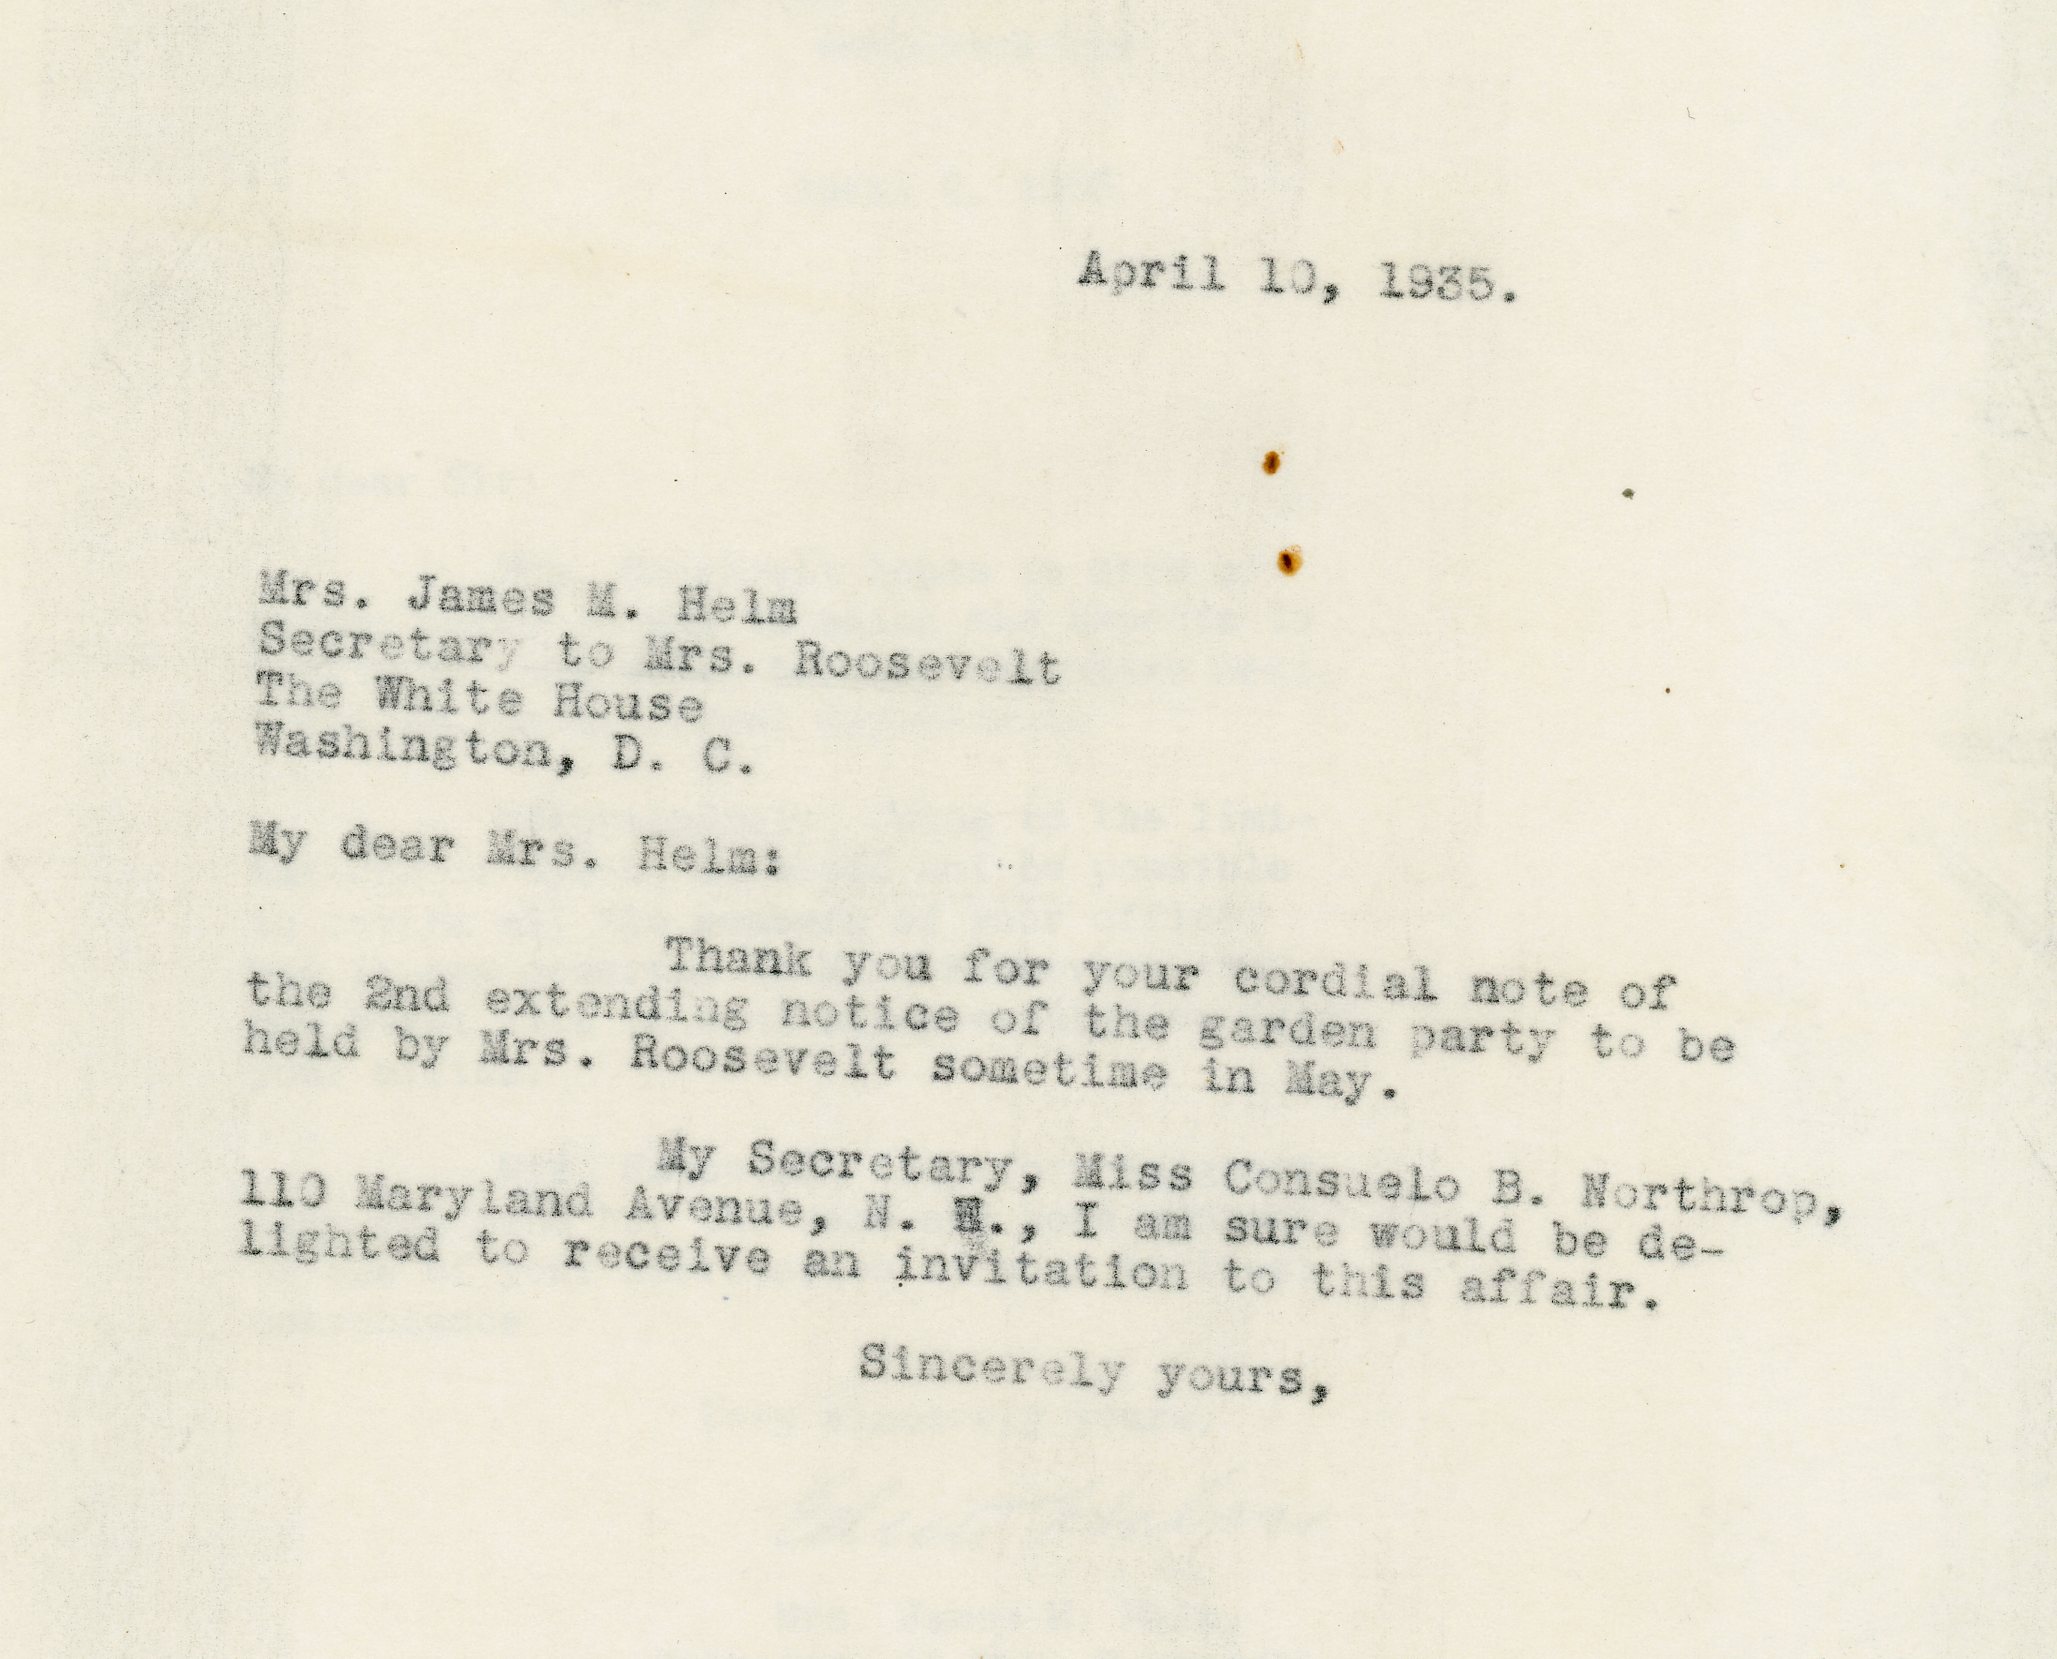 Senator Gibson to Mrs. James Helm, secretary to Eleanor Roosevelt, 1935 April 10